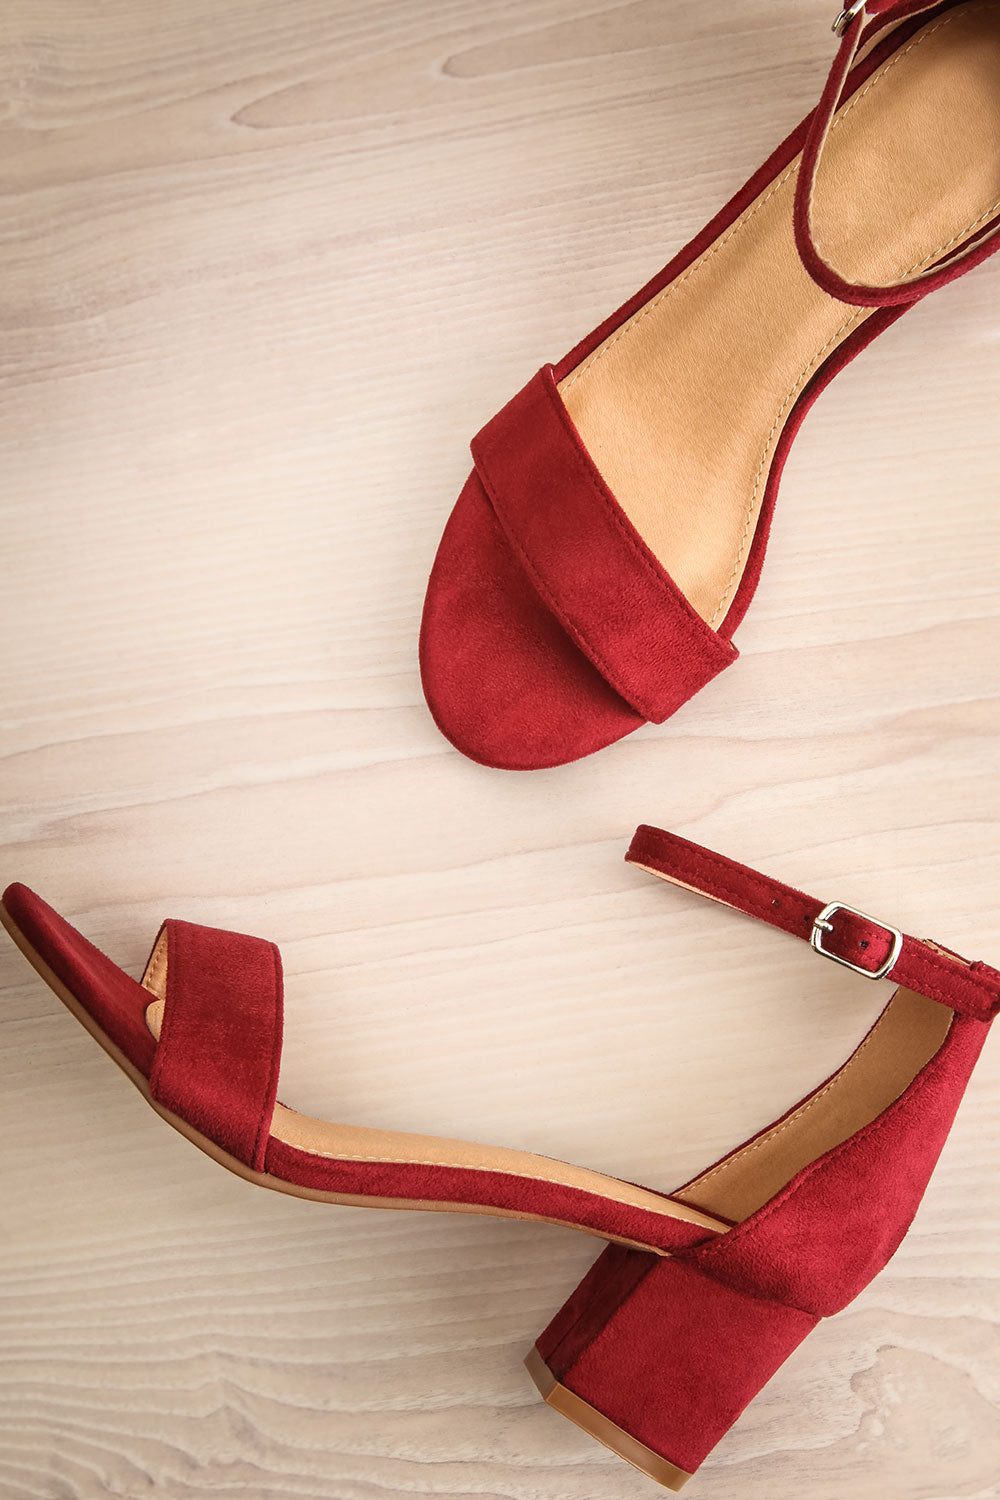 wine red sandals